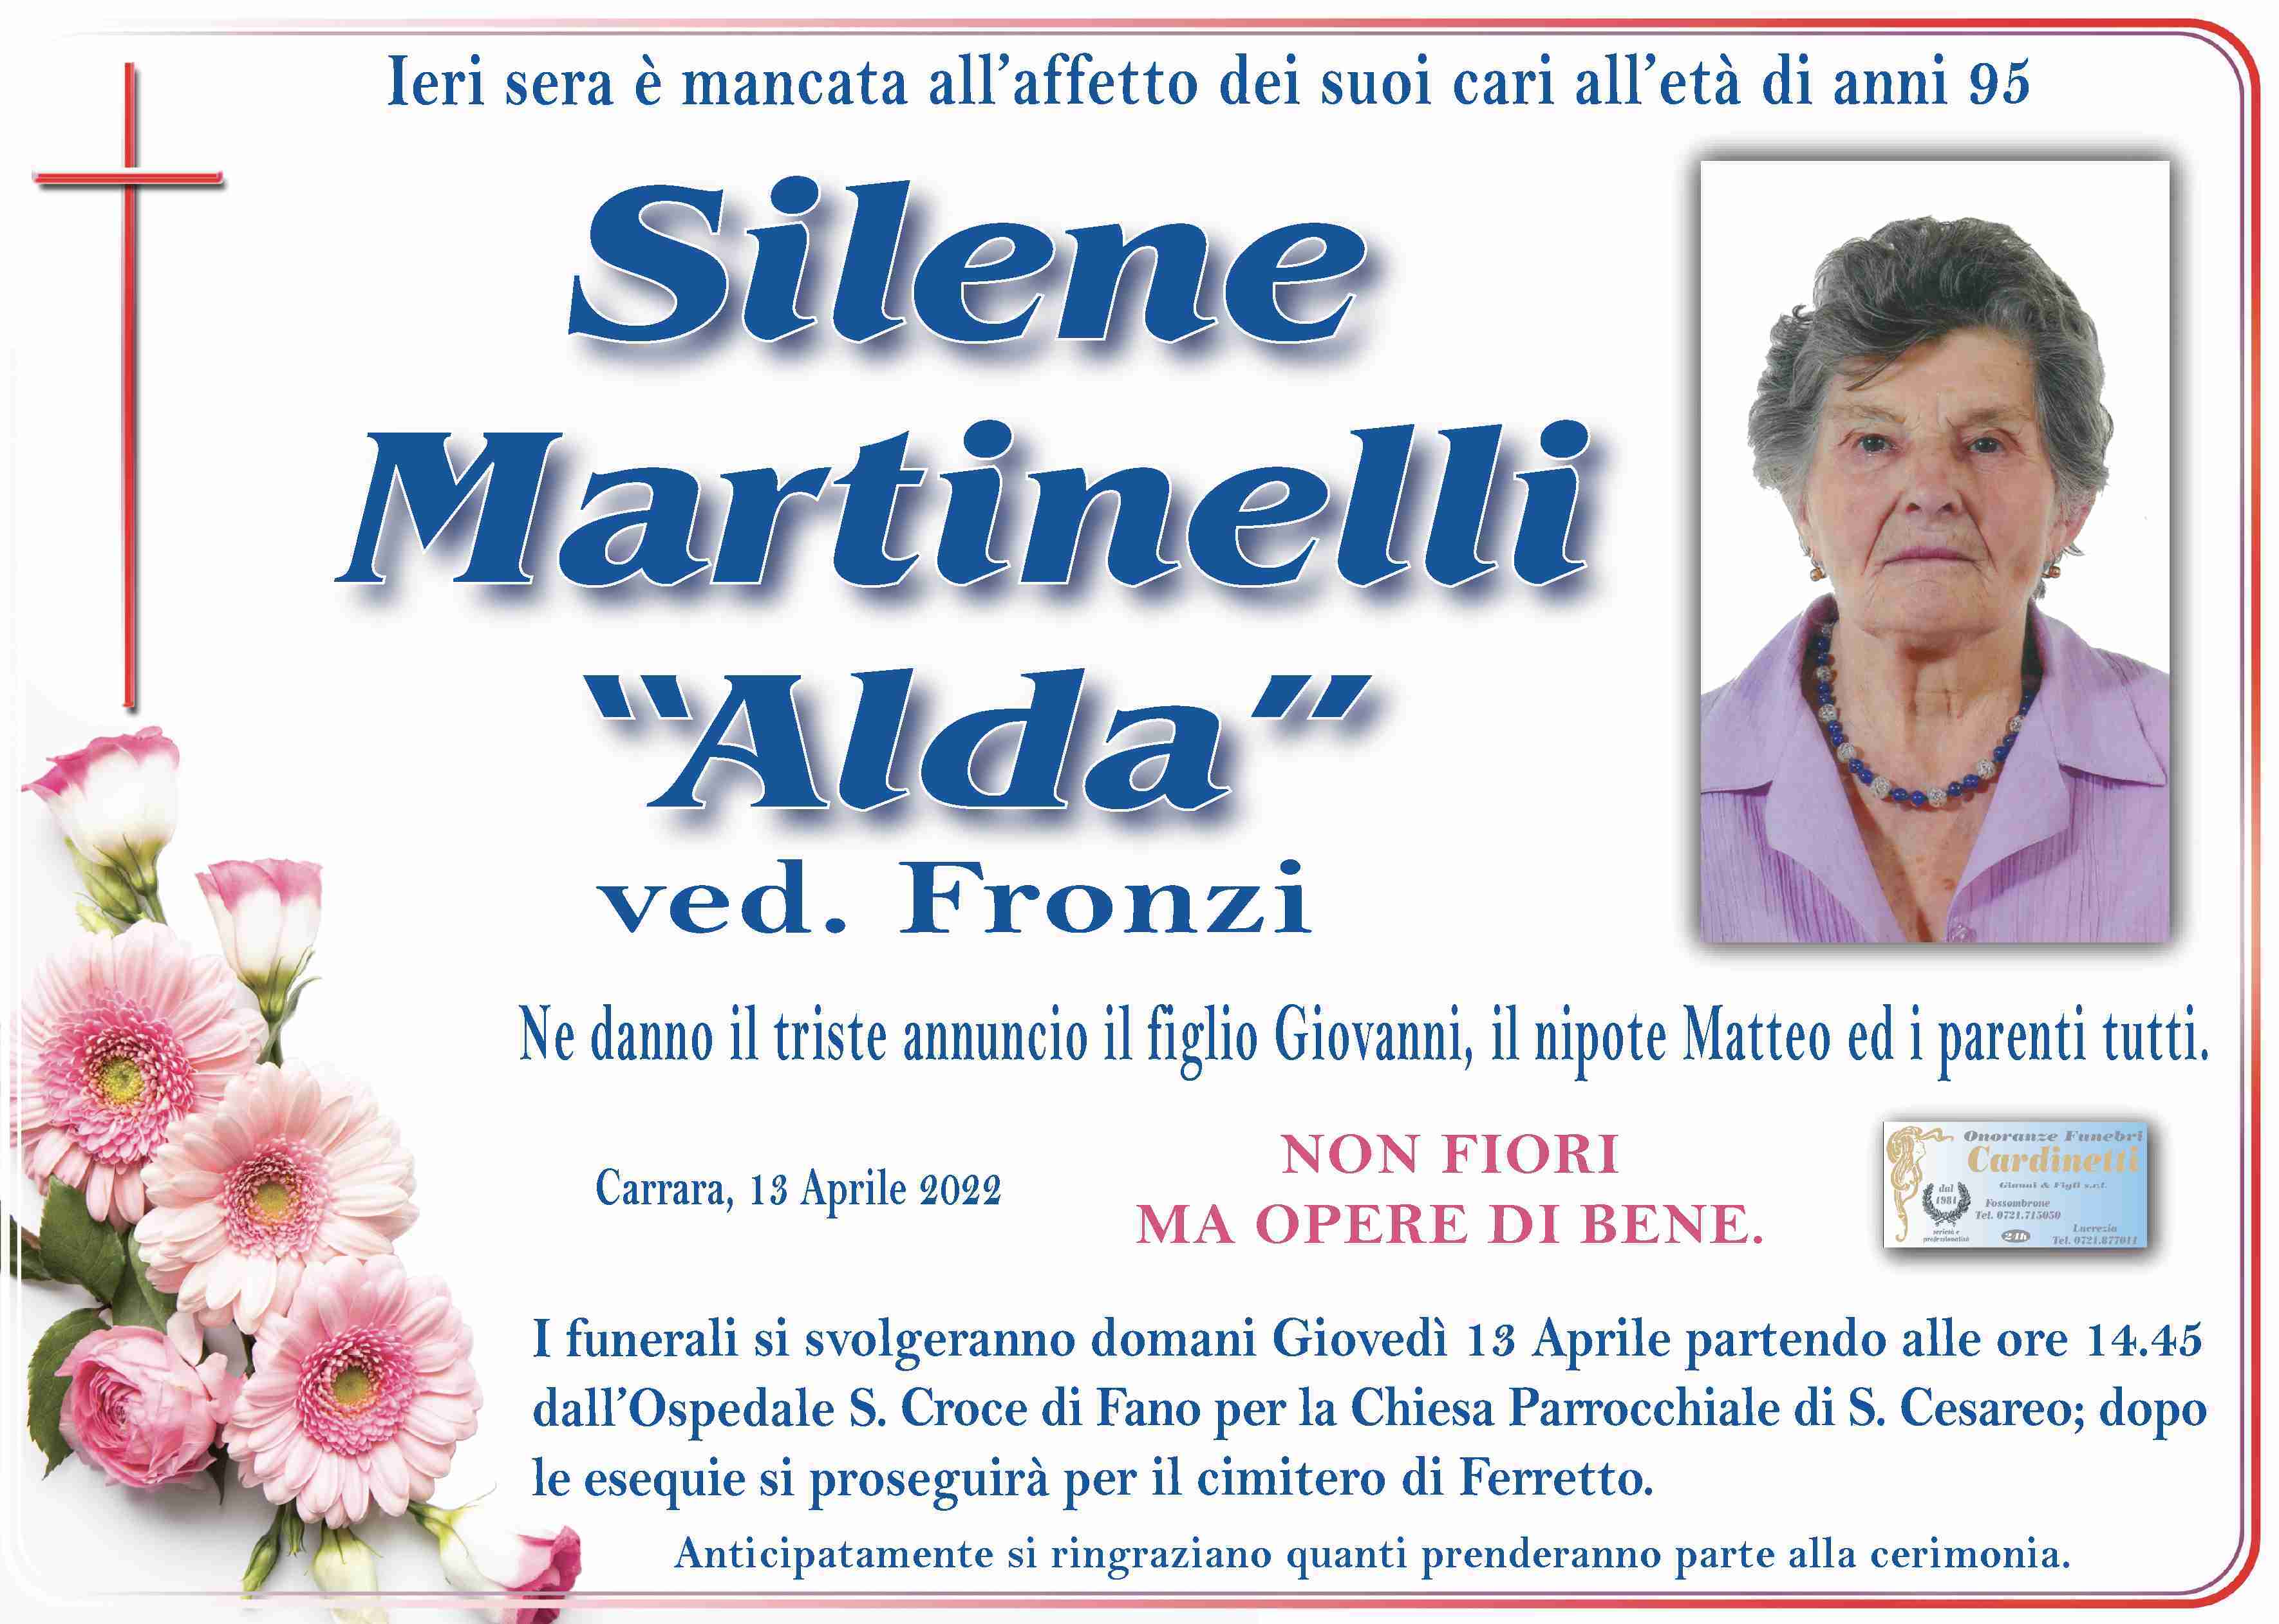 Silene Martinelli